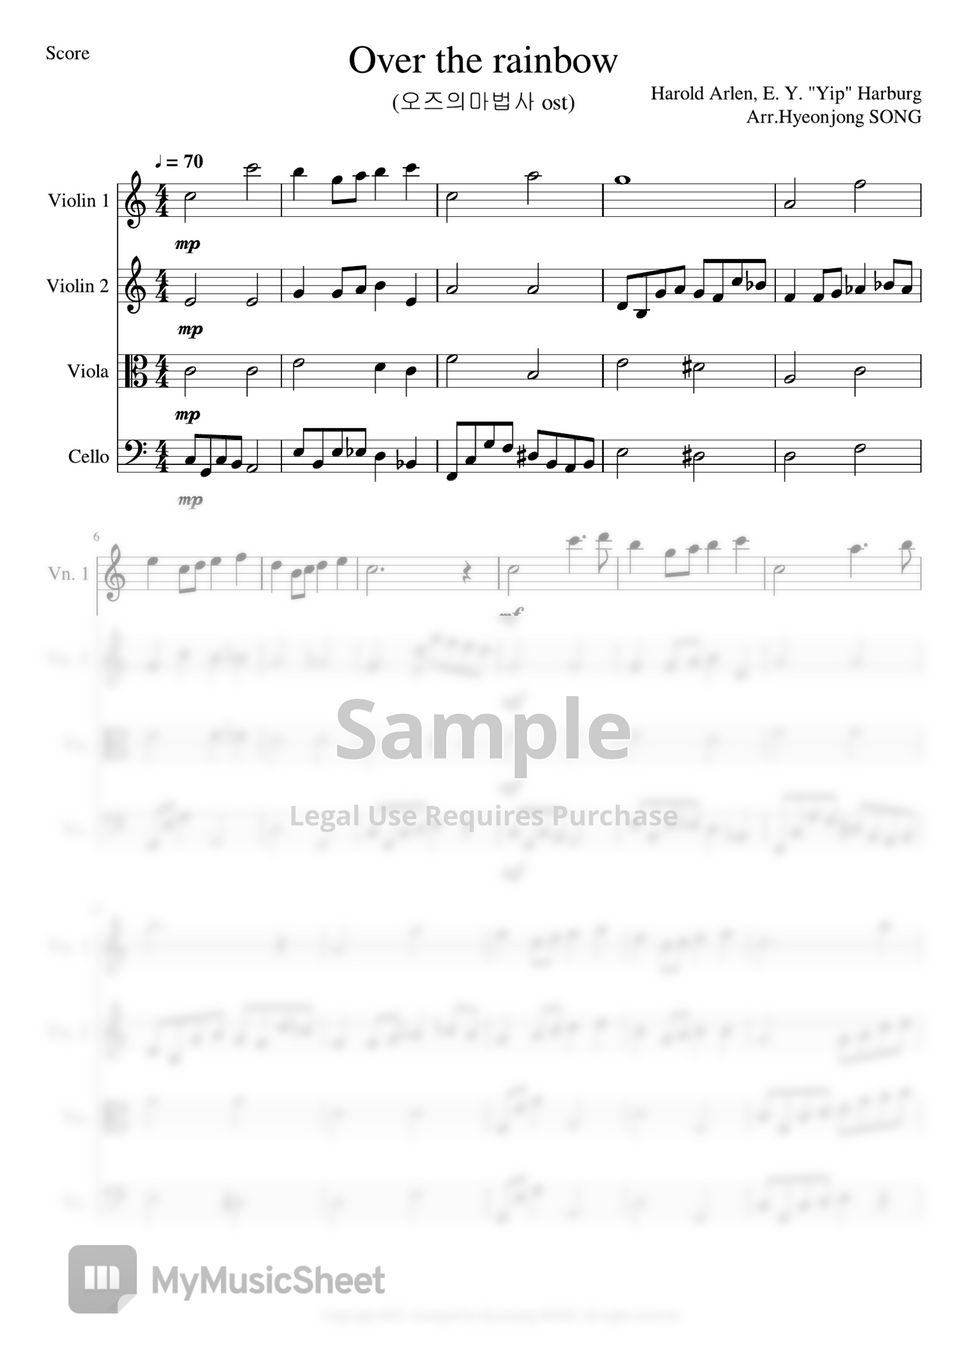 Harold Arlen - Over the rainbow (String Quartet Ver.) (Over the rainbow (String Quartet Ver.)) by Hyeonjong SONG